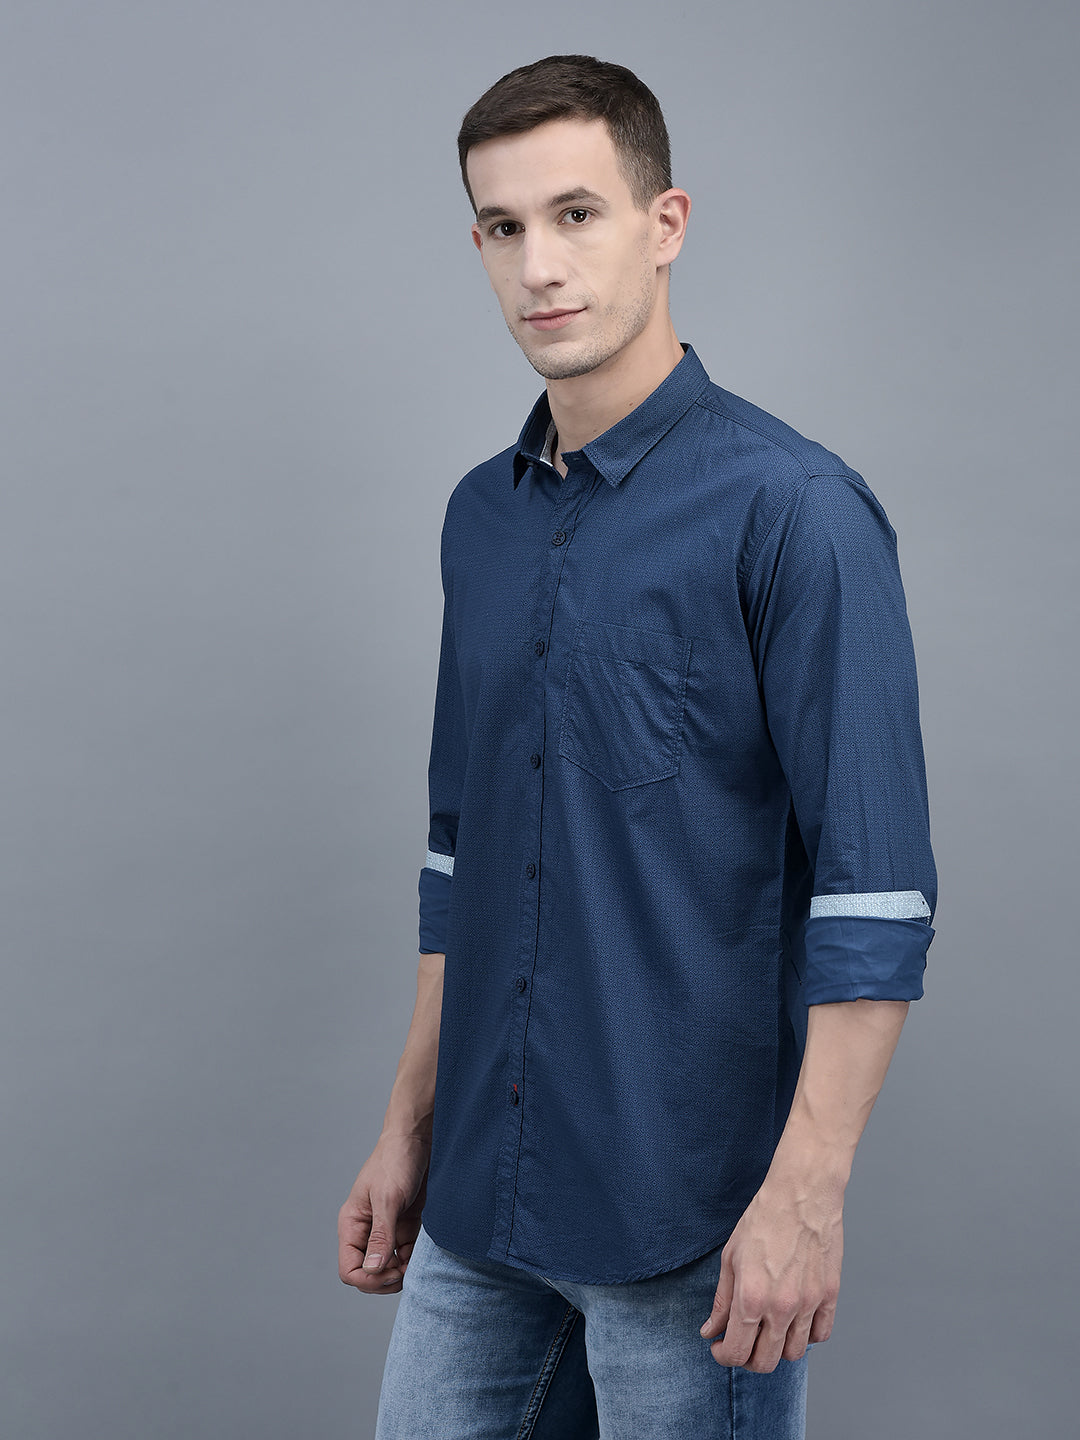 Full Men Indigo Blue Denim Shirt, Slim Fit at Rs 399 in Kanpur | ID:  14560828012